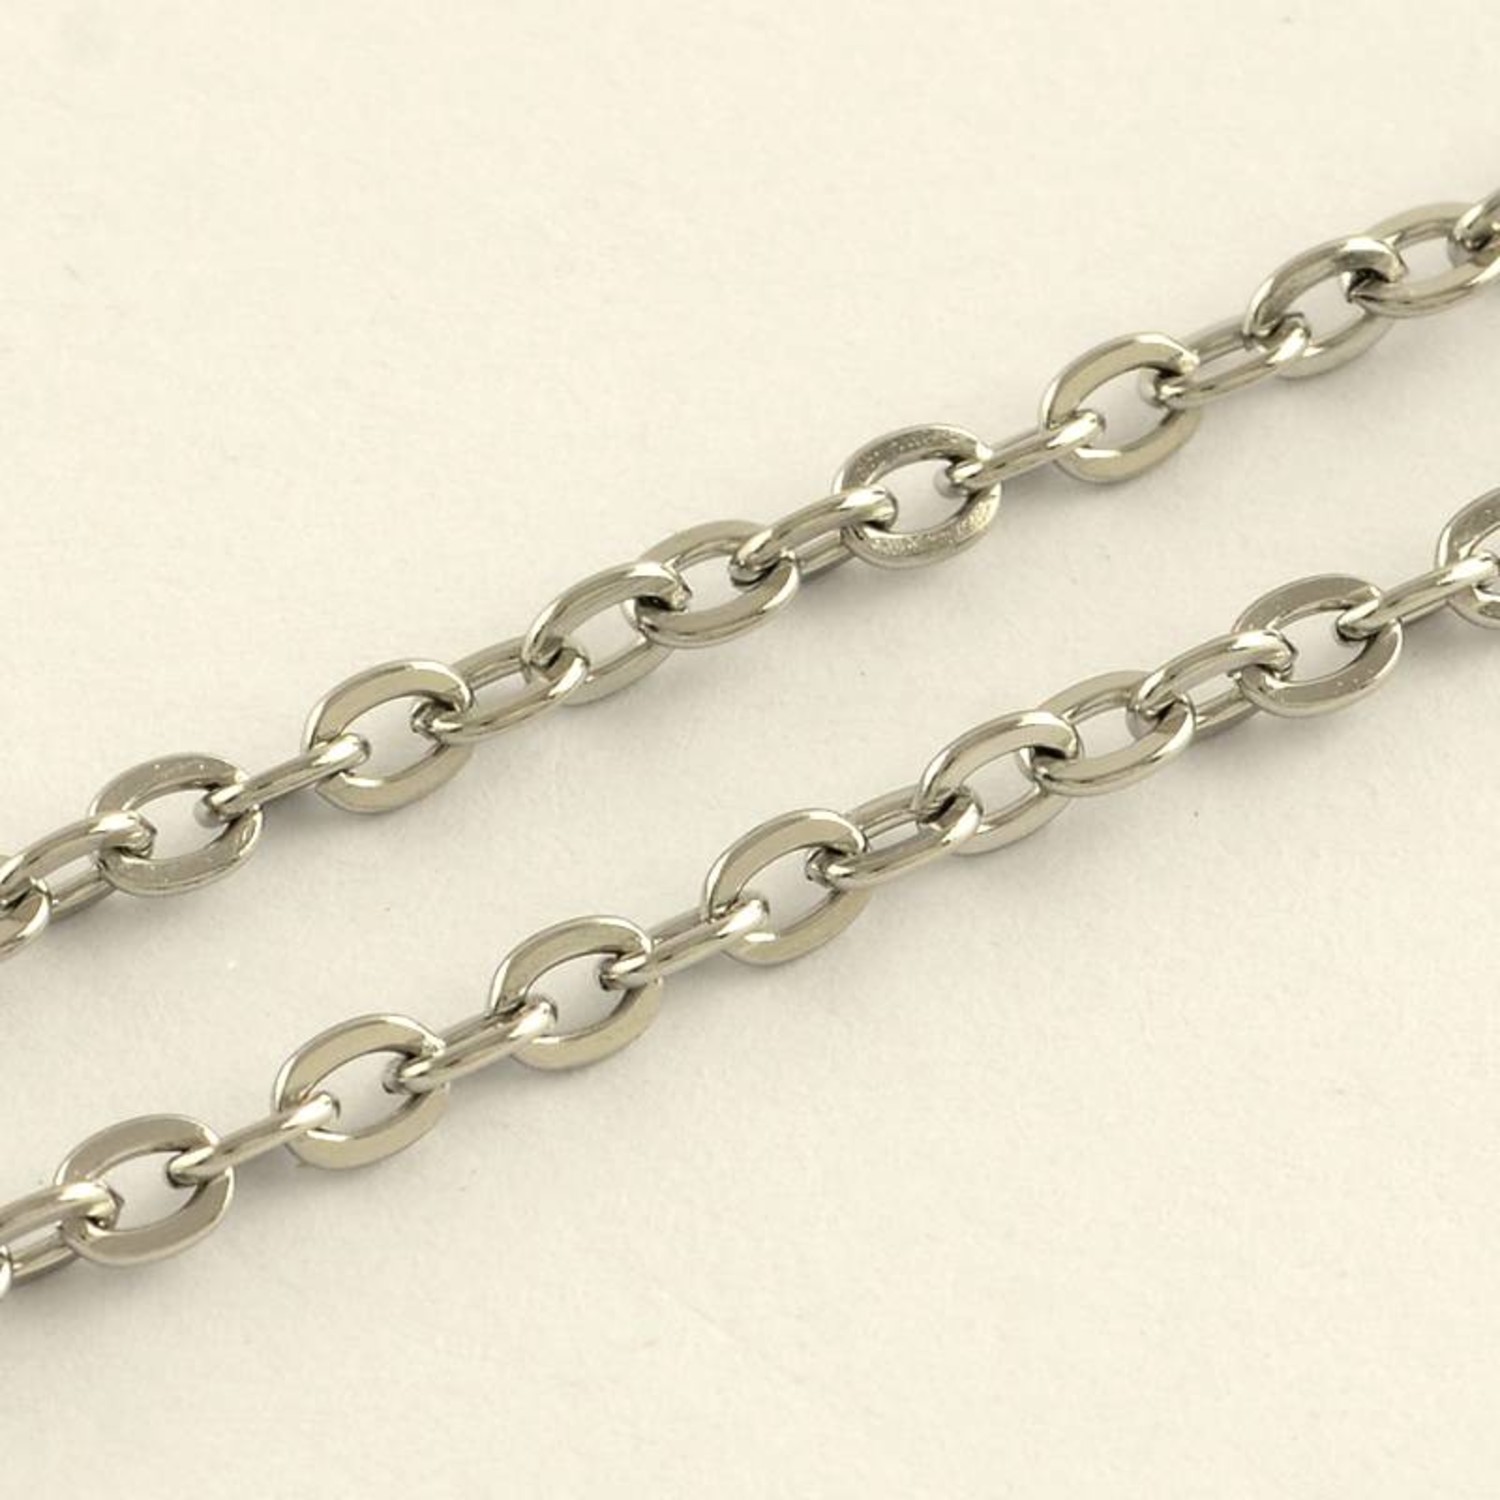 Stainless Steel Ketting Zilver 1 meter - Beads Basics